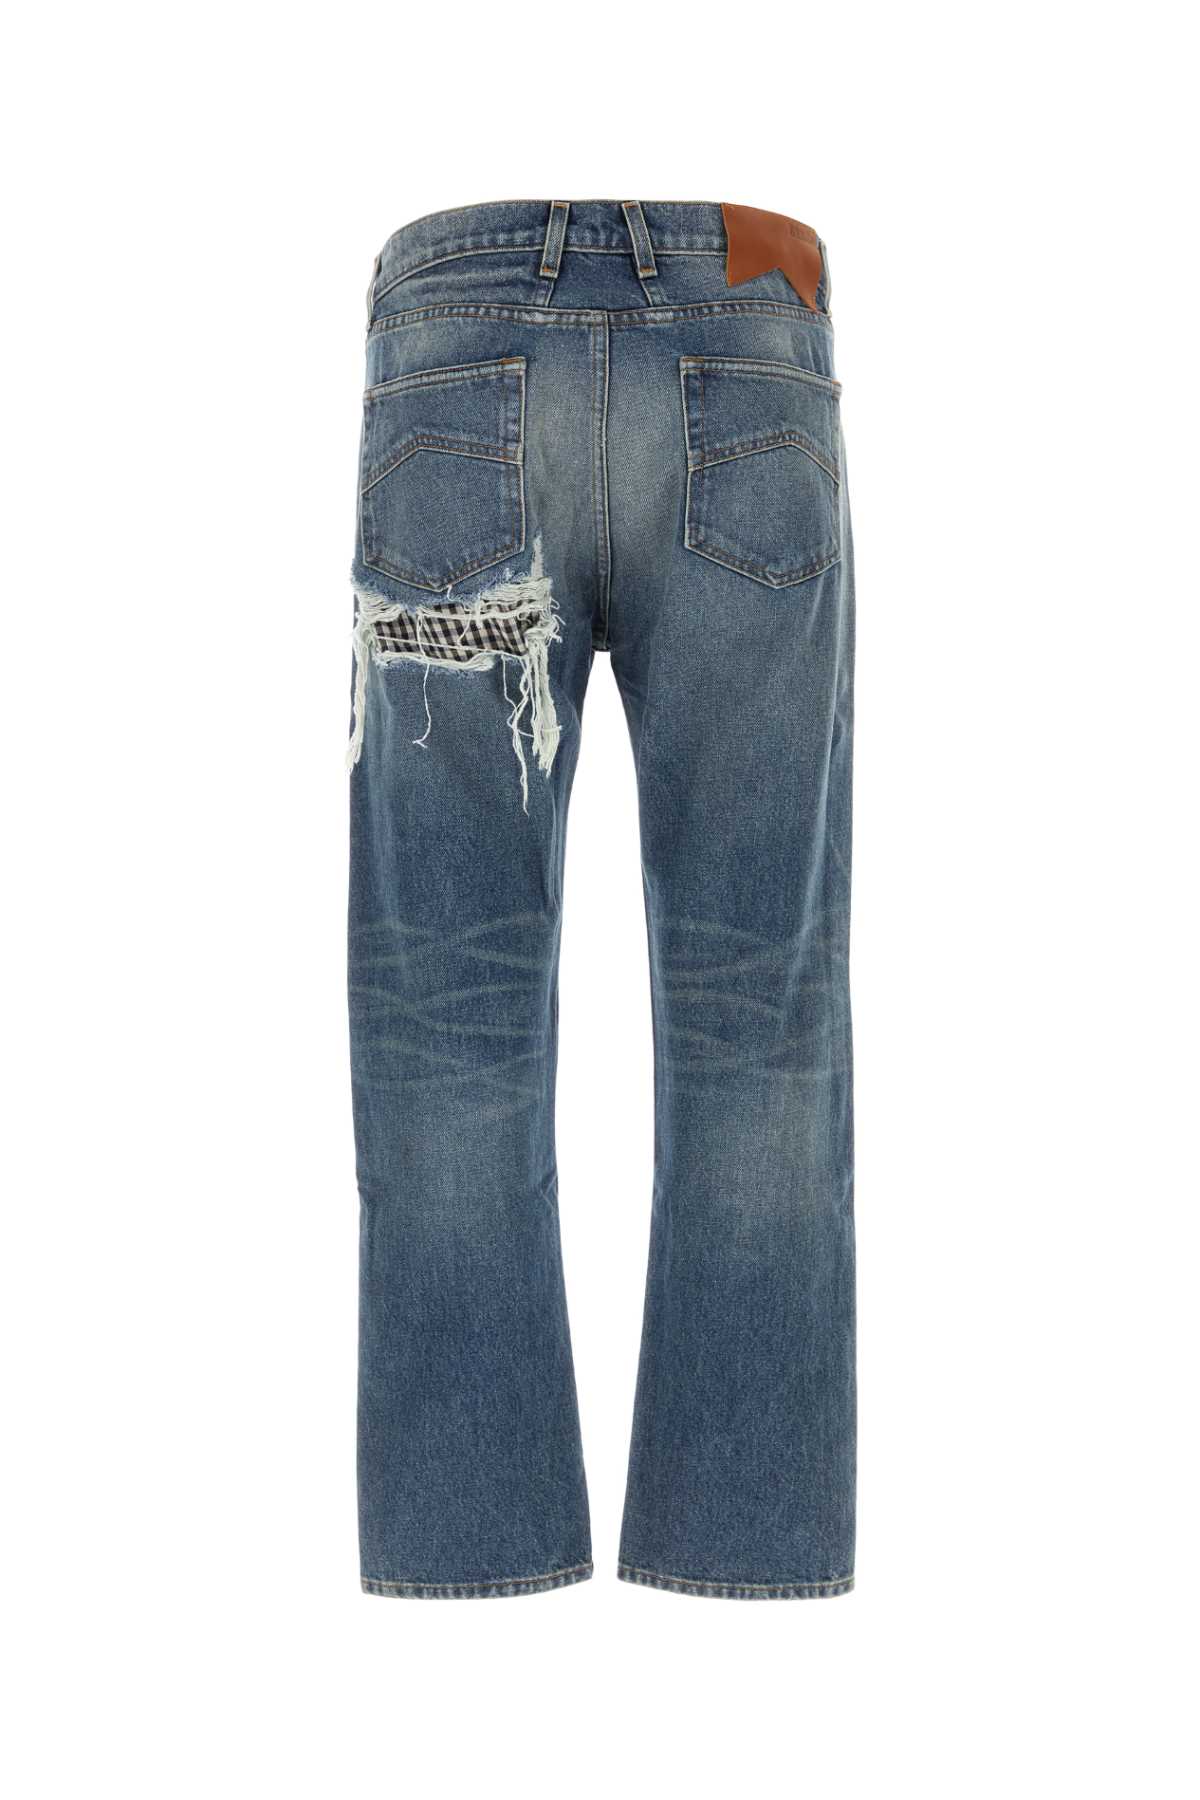 Rhude Denim Jeans In Indigo